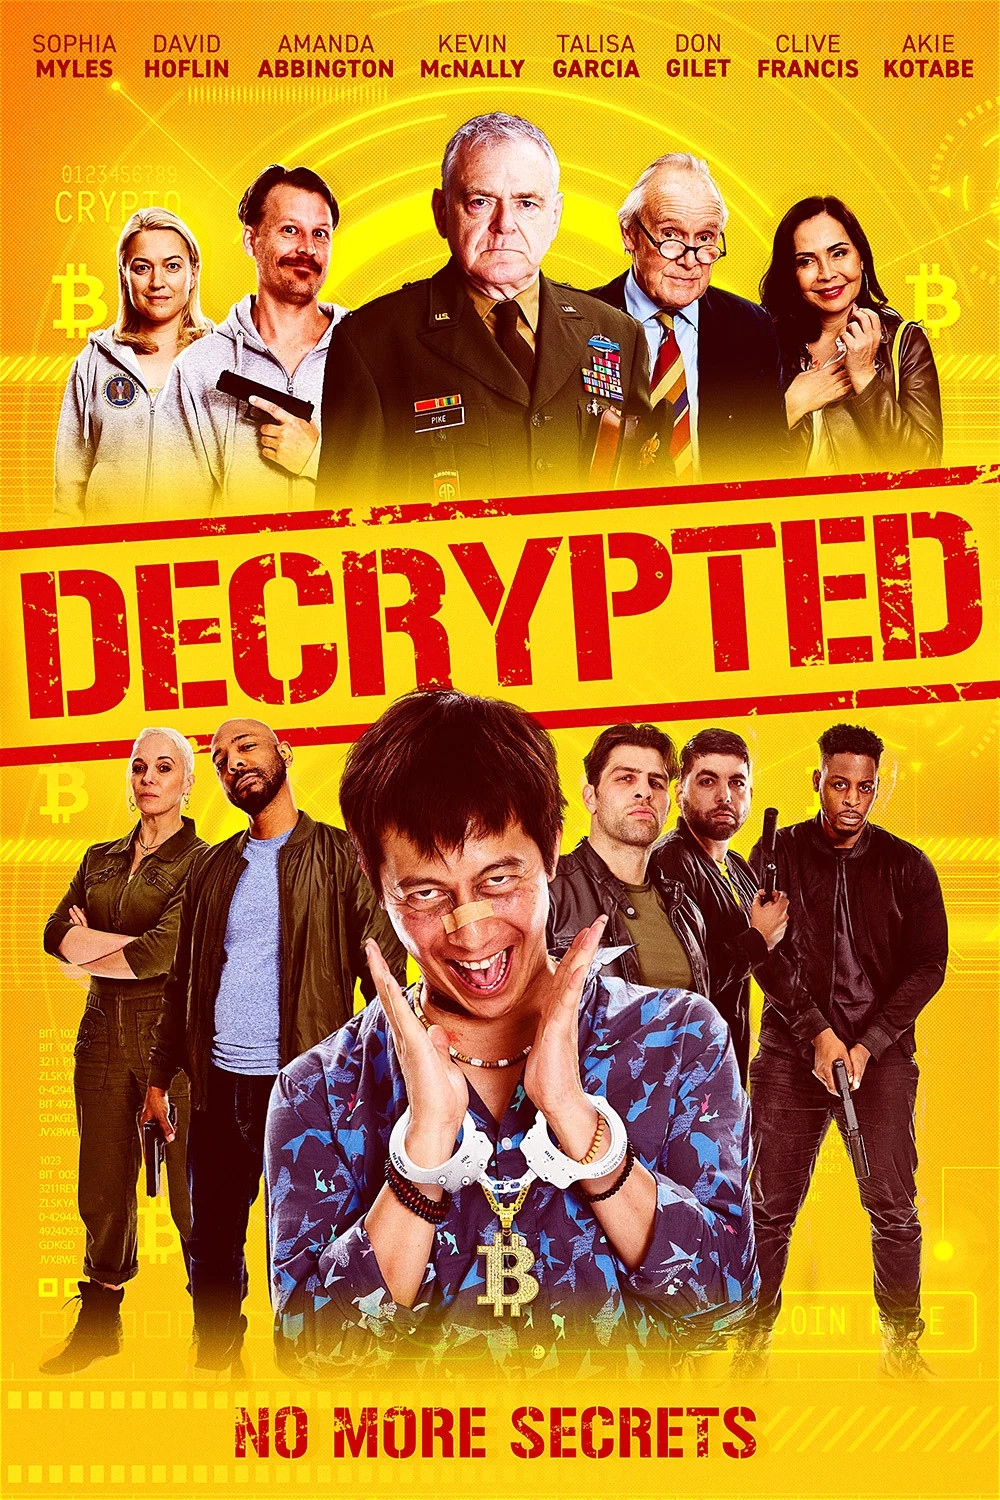 decrypted bitcoin movie